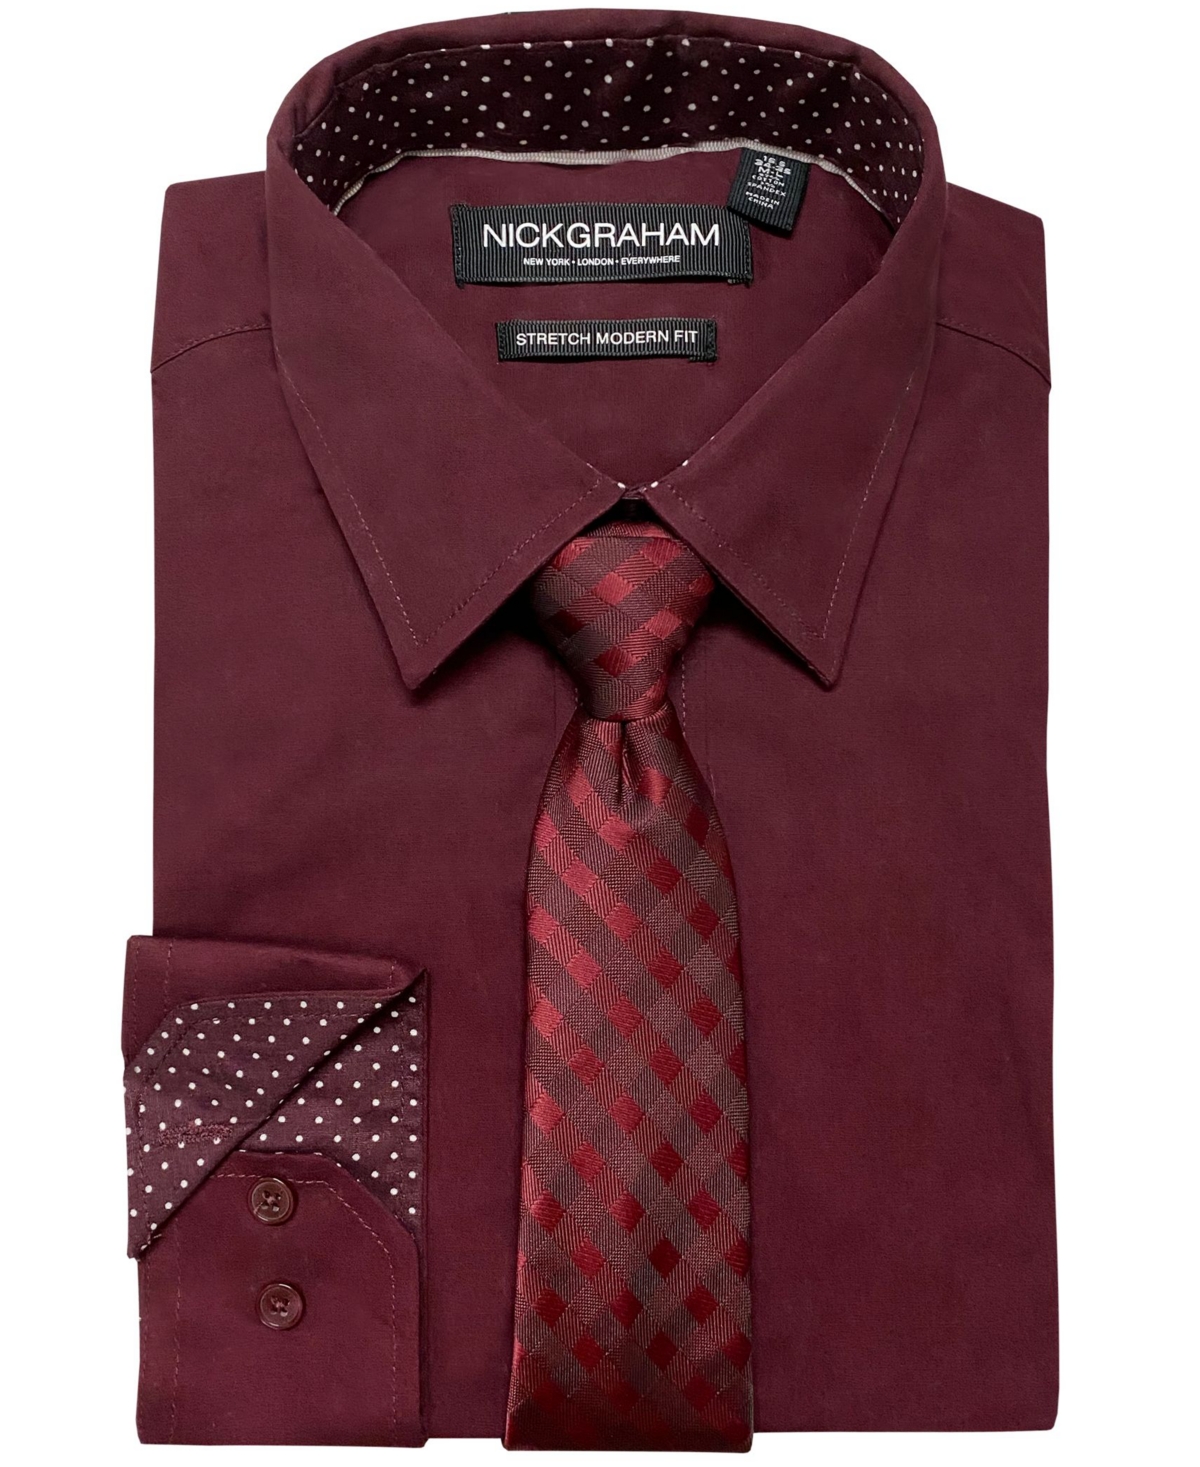 Men's Modern-Fit Stretch Dress Shirt & Tonal Plaid Tie Set - Burgundy